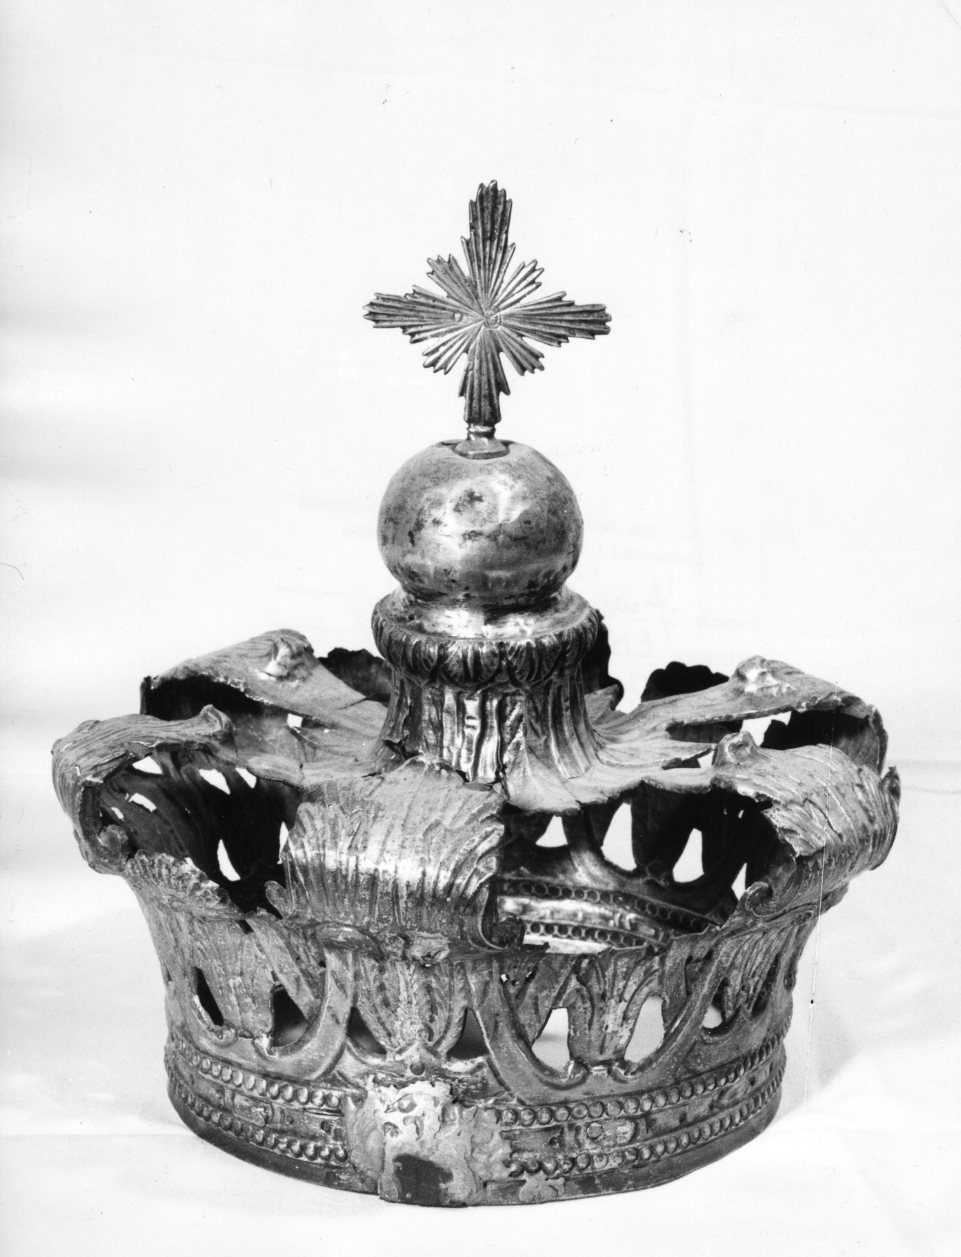 corona da statua di monogrammista SP (sec. XIX)